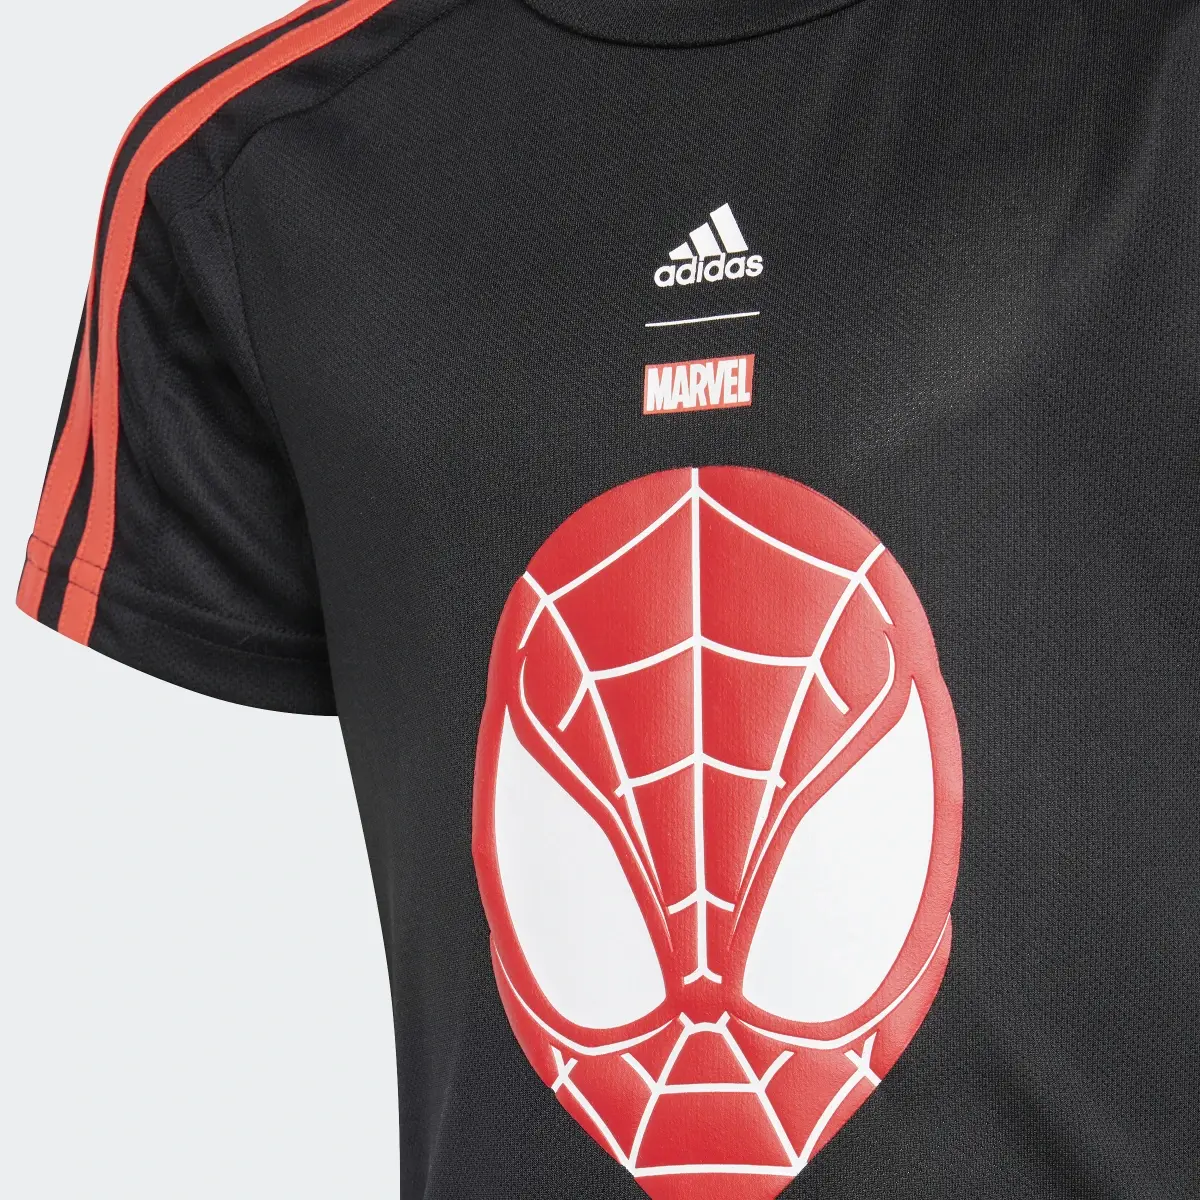 Adidas x Marvel Spider-Man Tee. 3